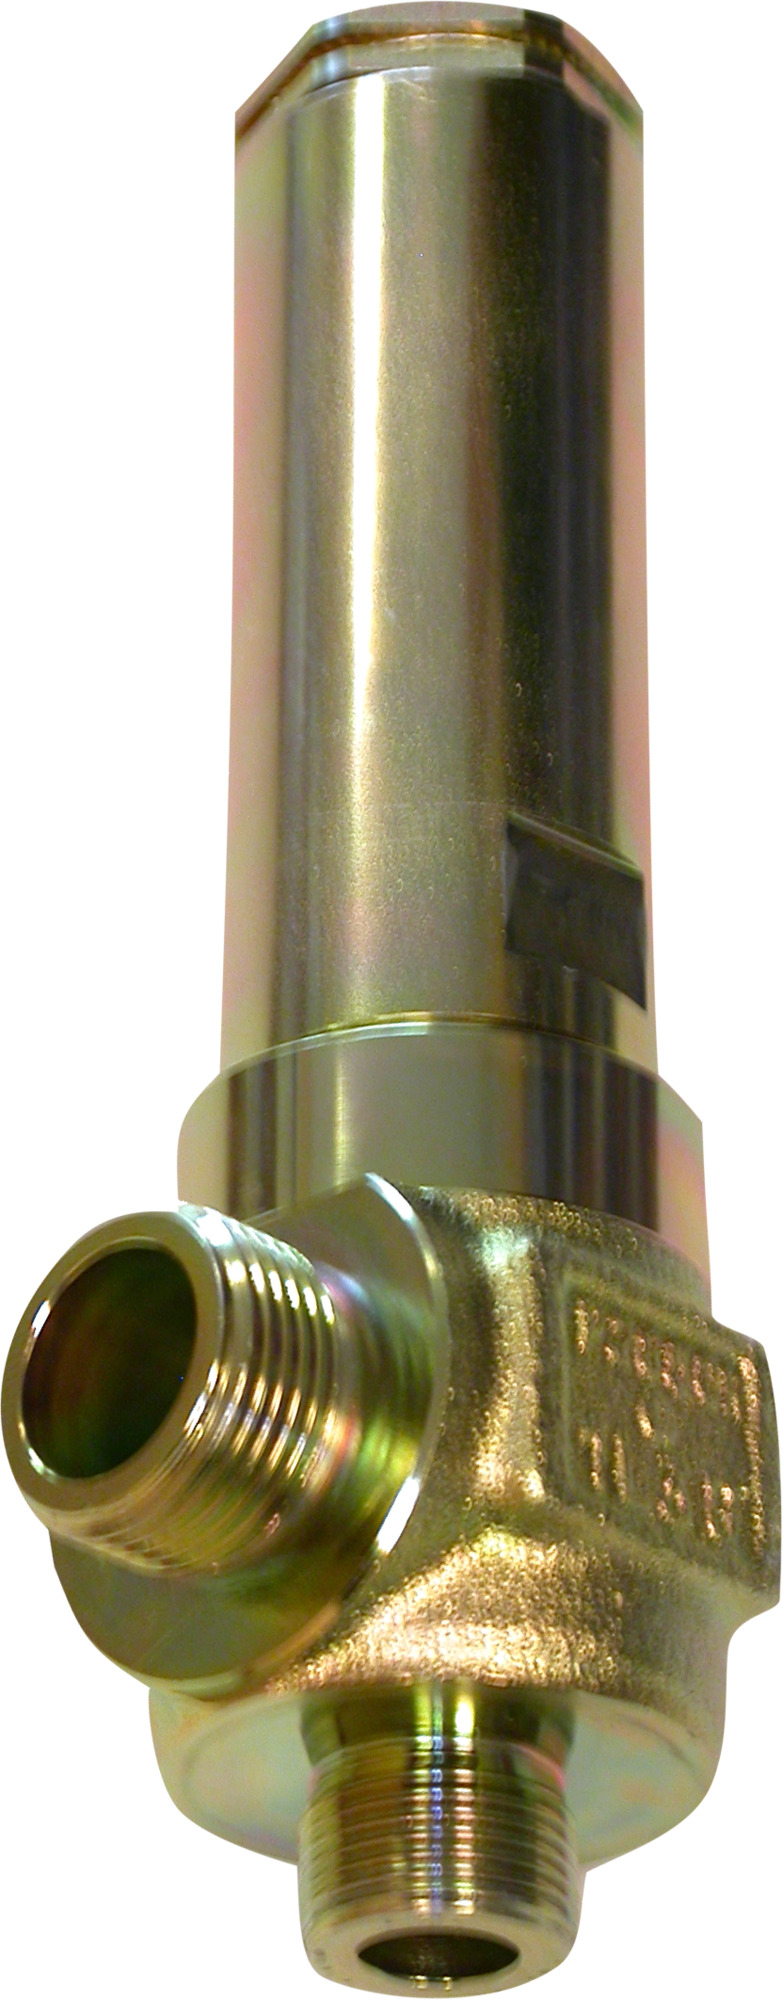 Safety relief valve, SFA 15, G, 18 bar